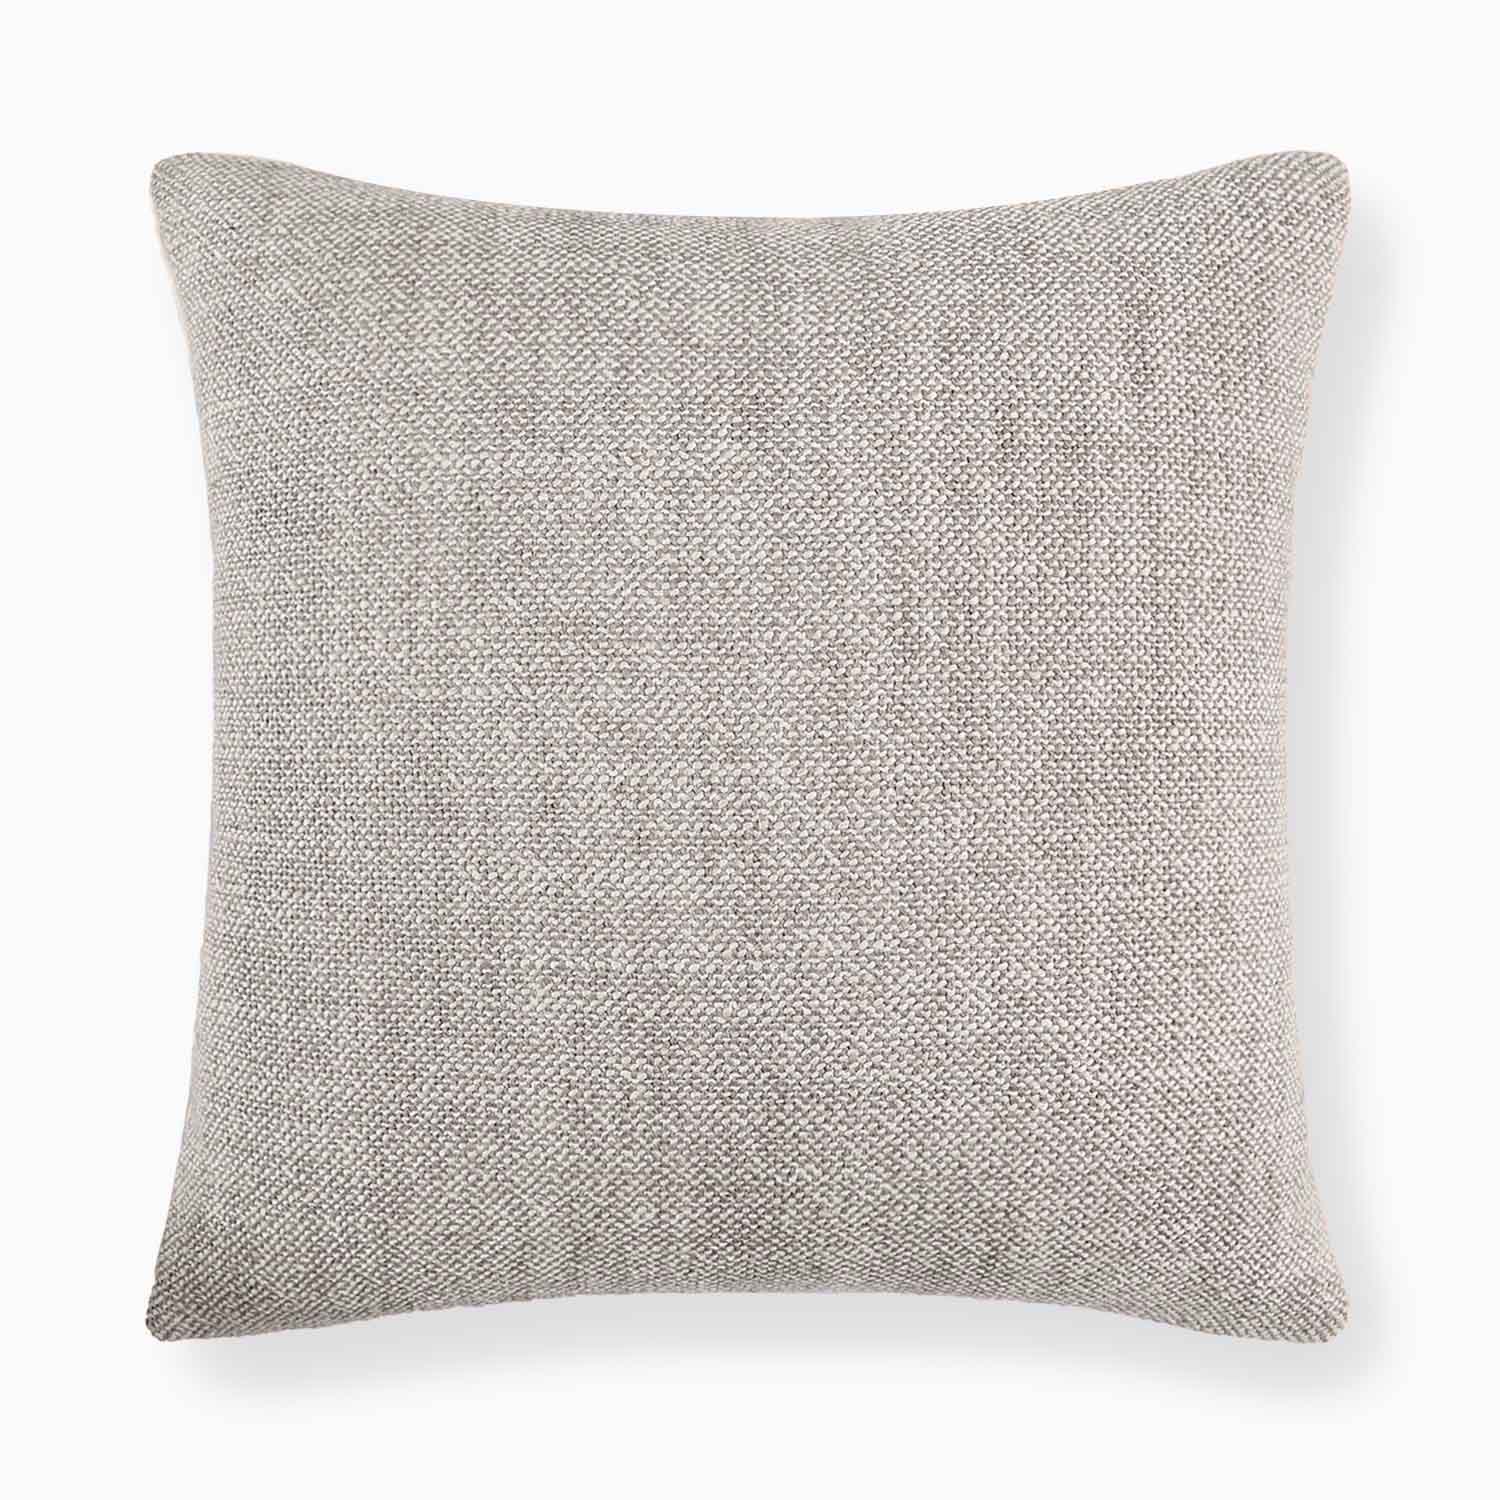 Savona Textured Linen Pillow Cover-Grey Linen pillow cover